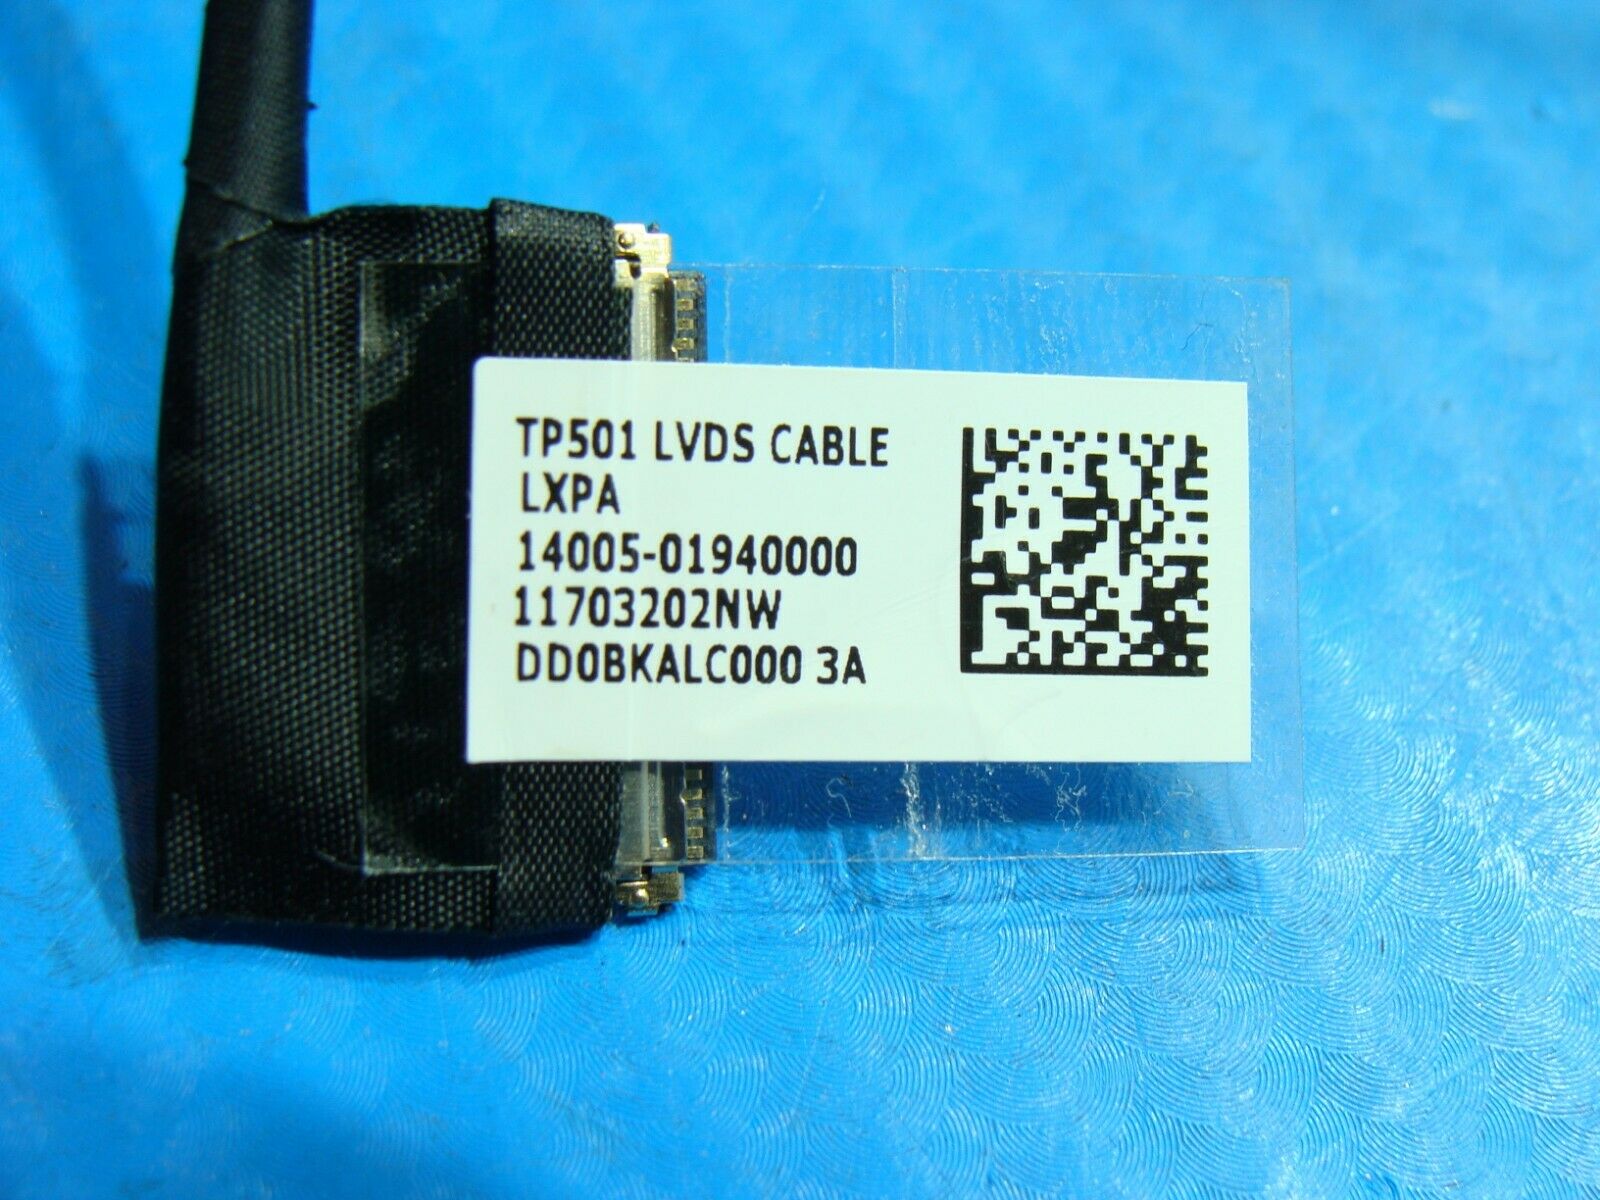 Asus VivoBook Flip R518UA-RS51T 15.6